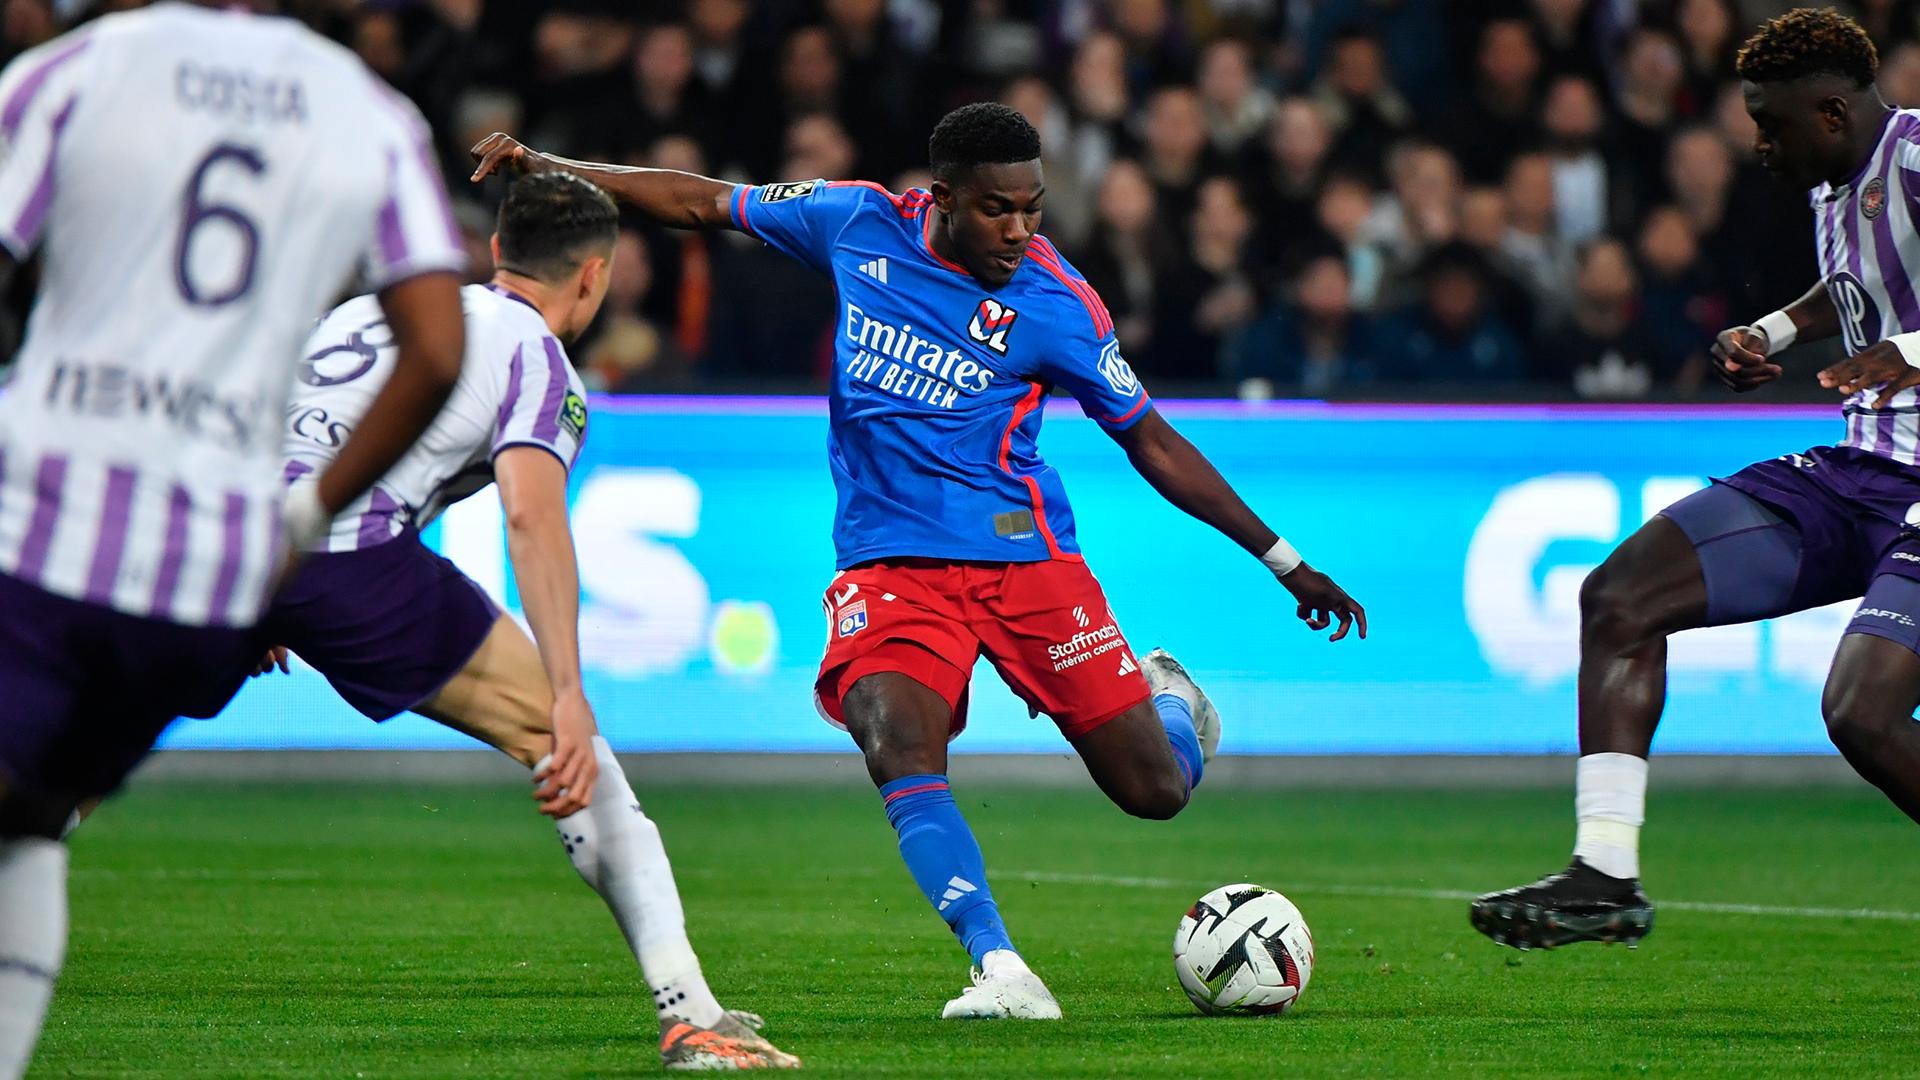 VIDEO | Ligue 1 Highlights: Toulouse vs Lyon